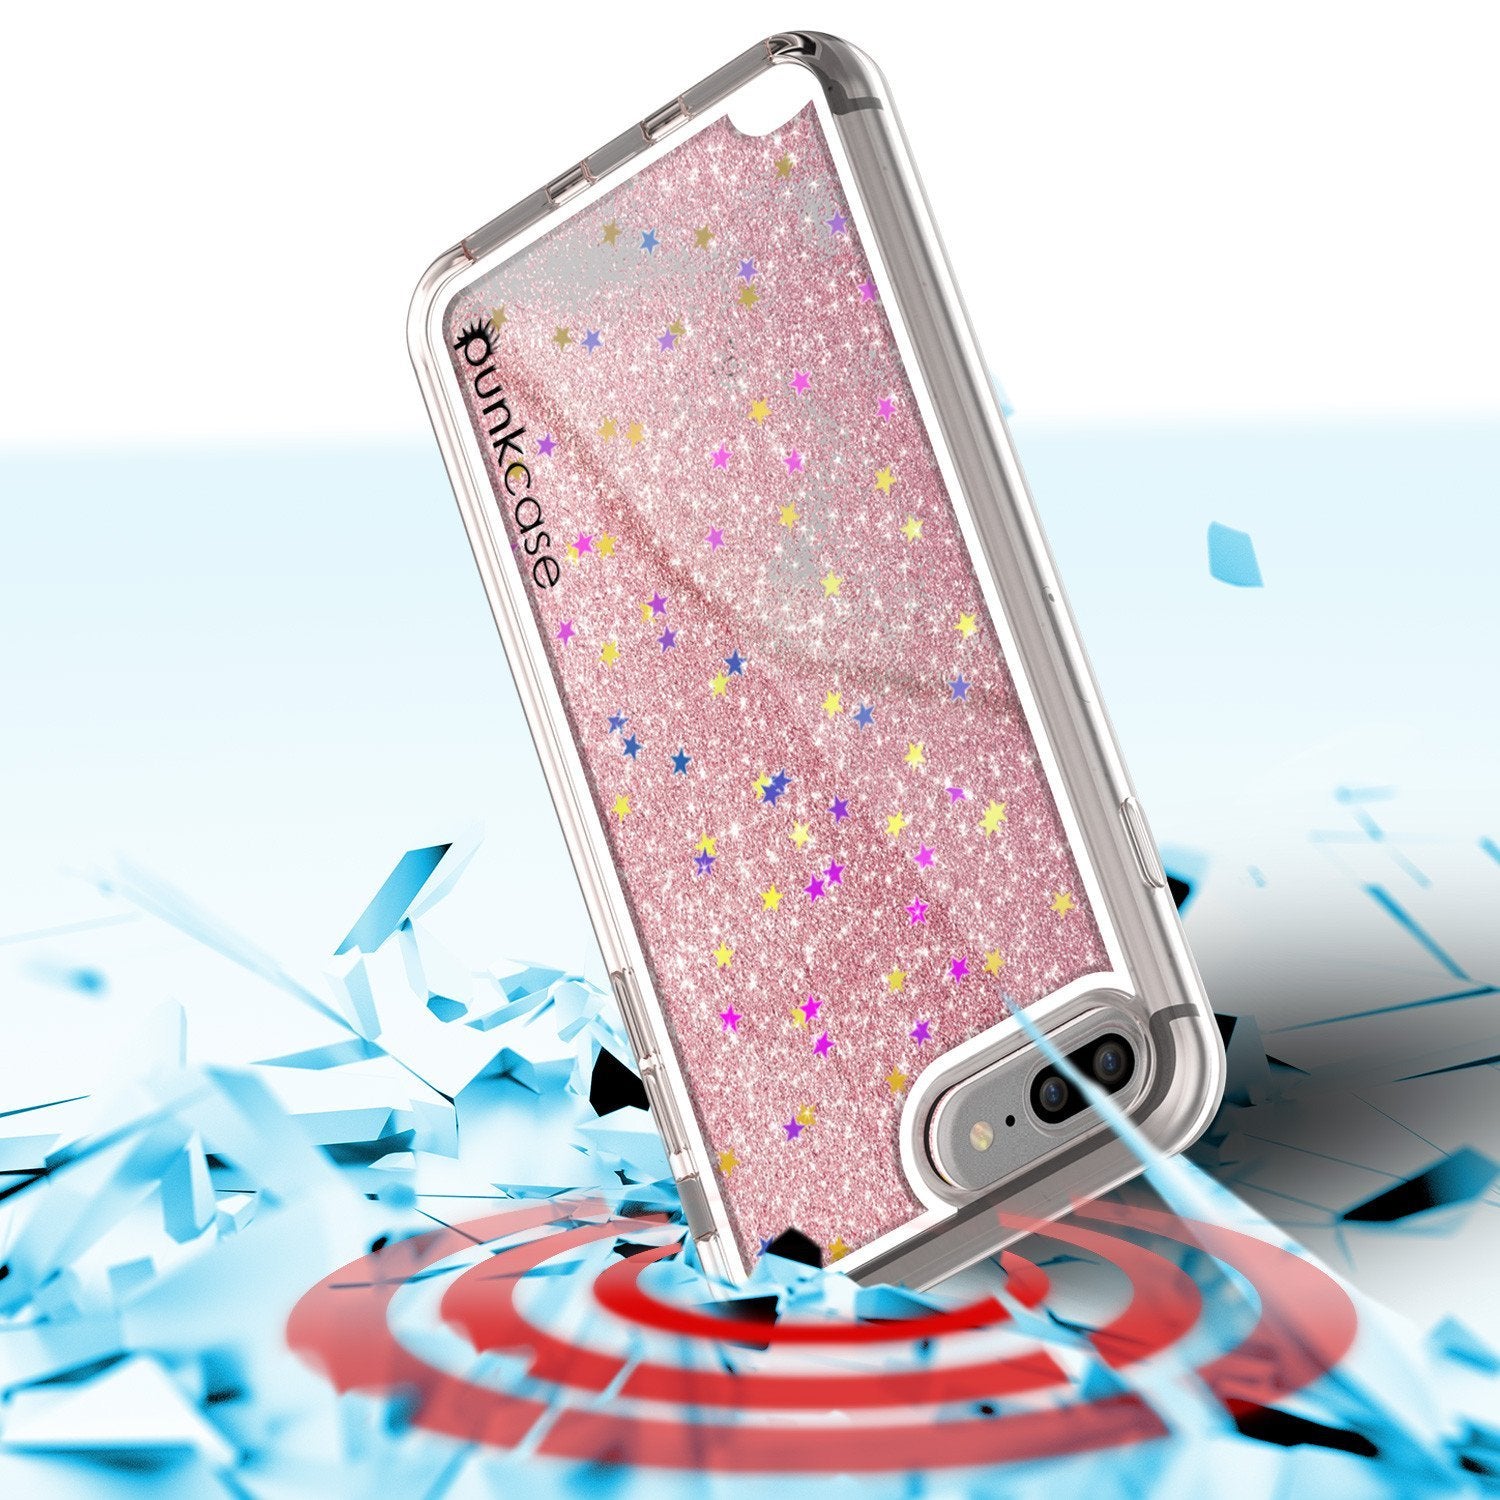 iPhone 8+ Plus Case PunkCase Liquid Rose, Floating Glitter Cover Series